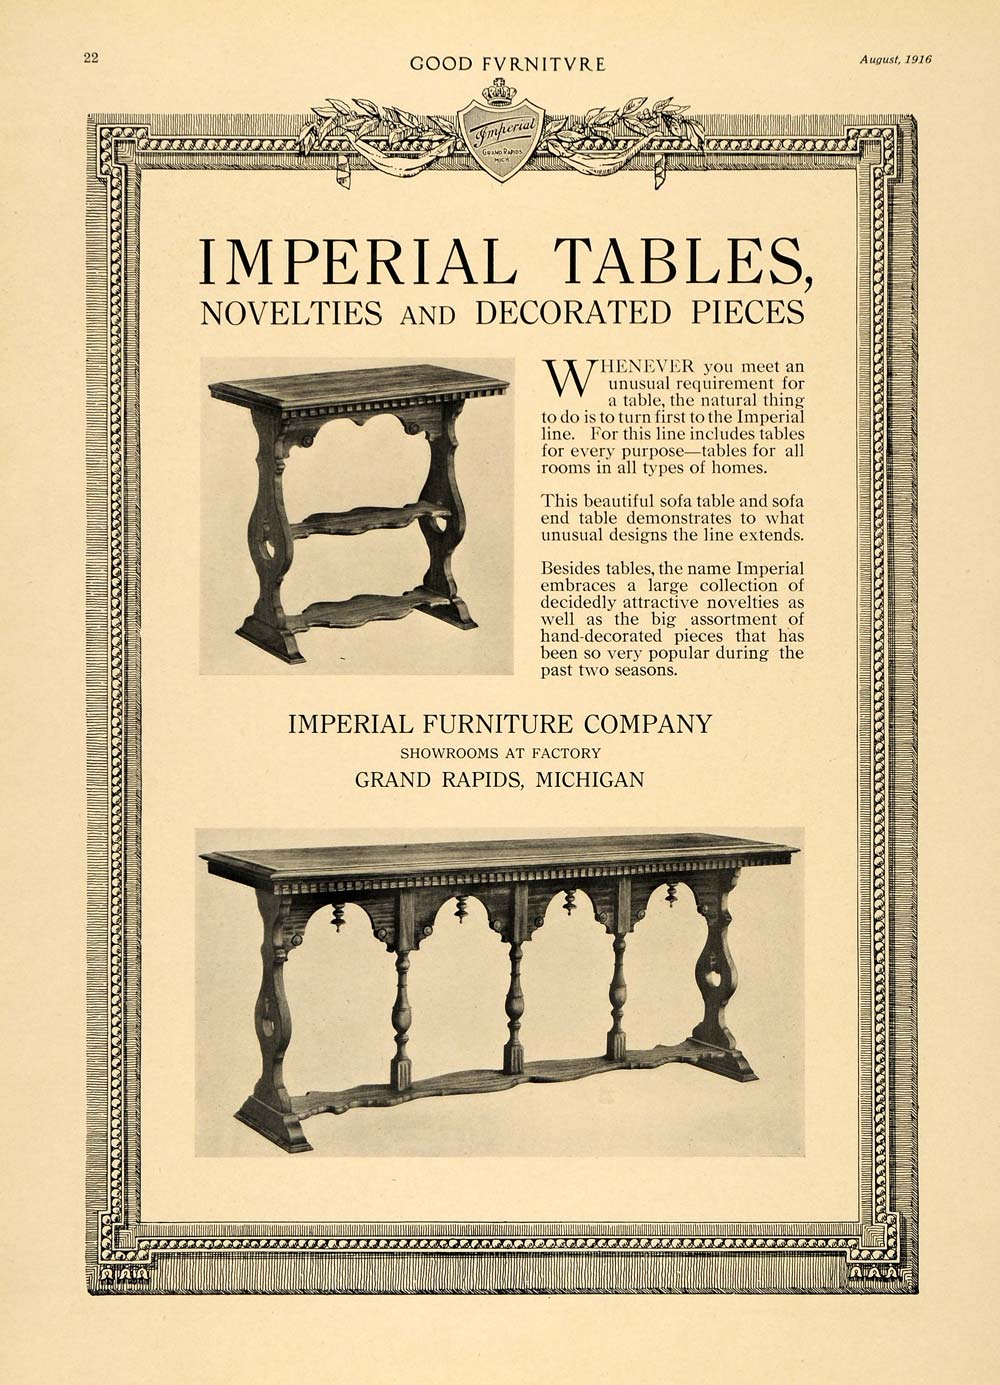 1916 Ad Sofa End Tables Imperial Furniture Company Deco Original